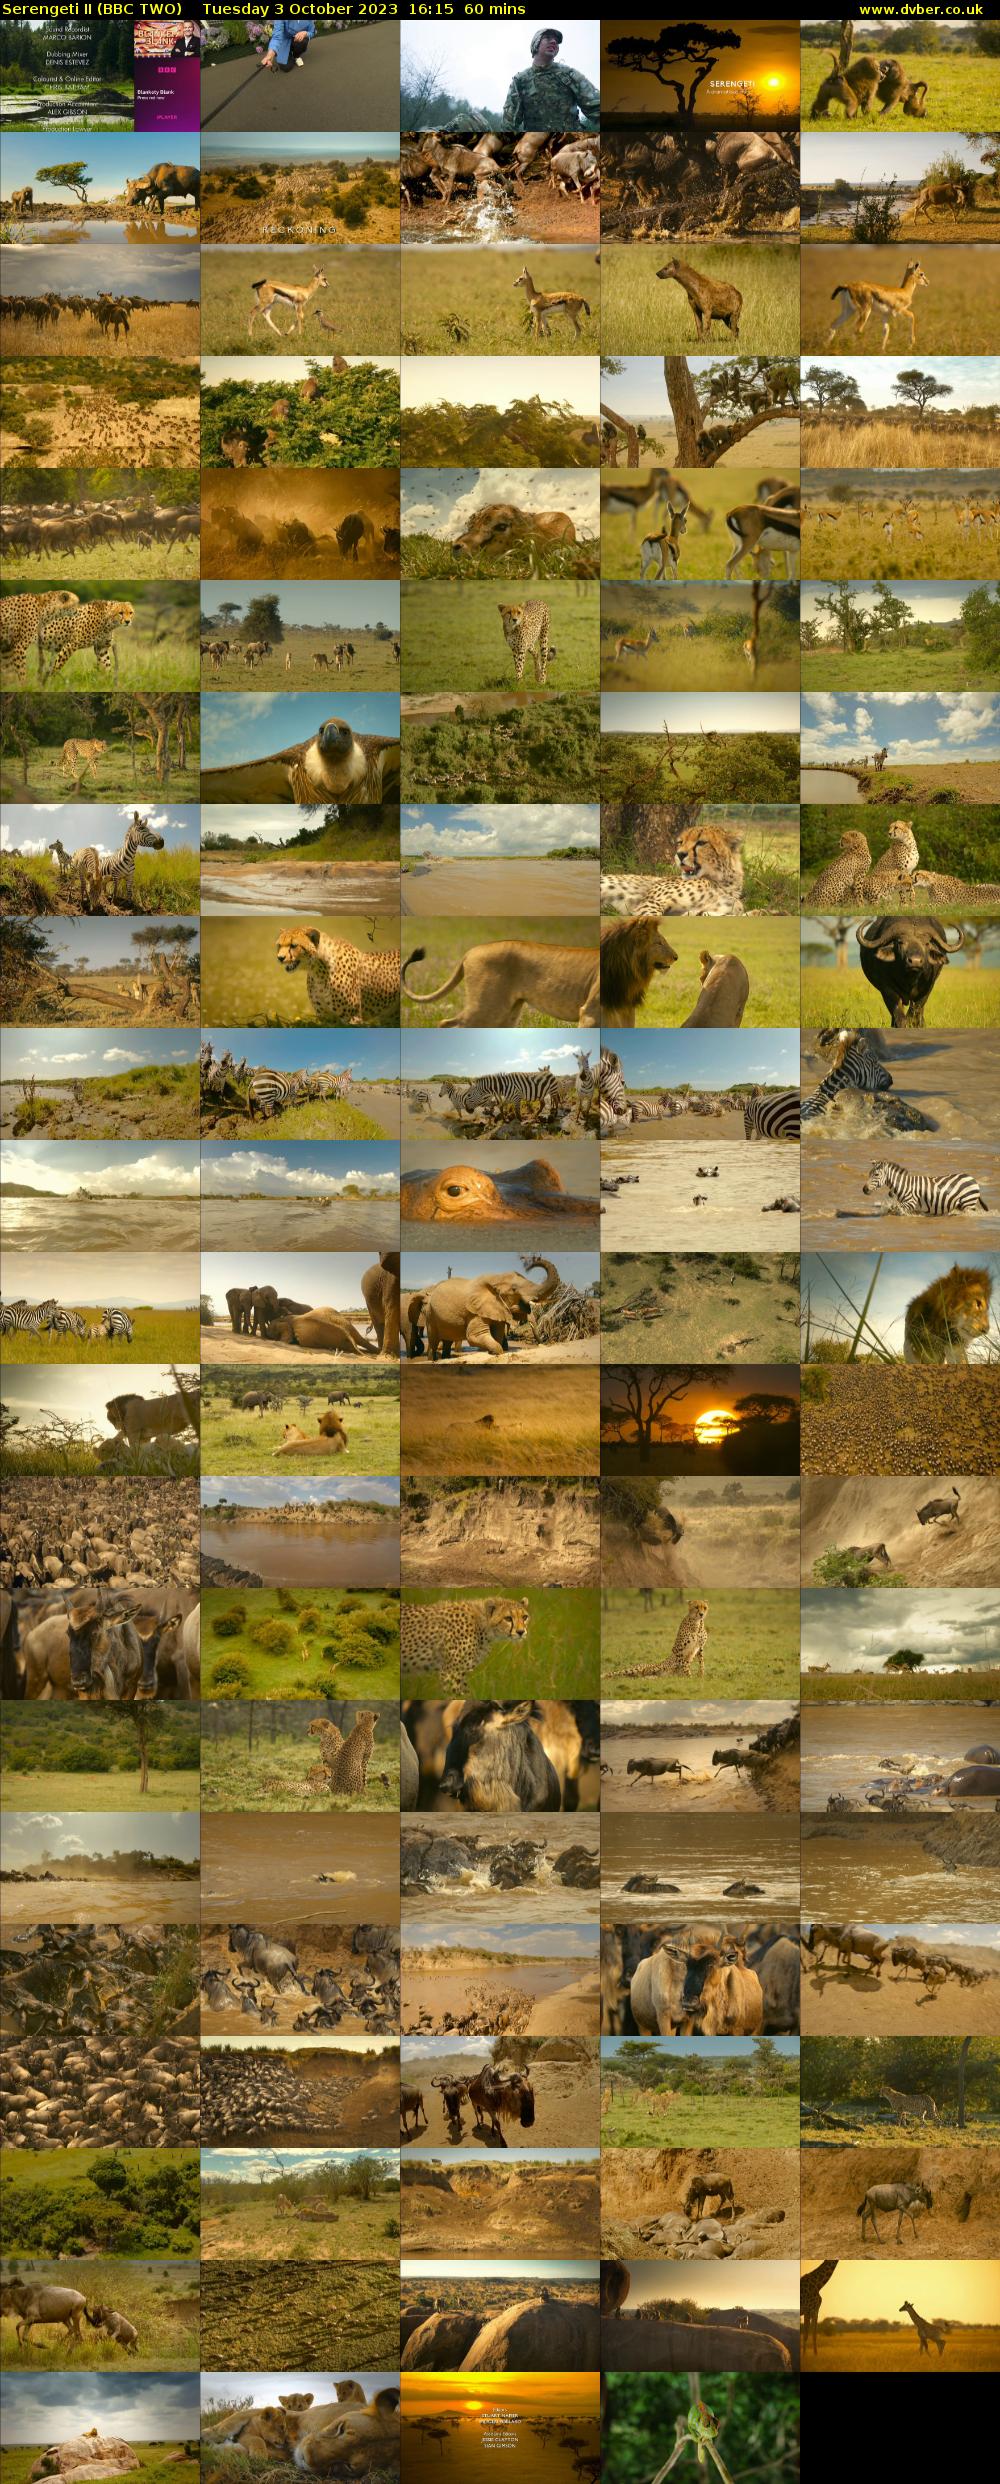 Serengeti II (BBC TWO) Tuesday 3 October 2023 16:15 - 17:15